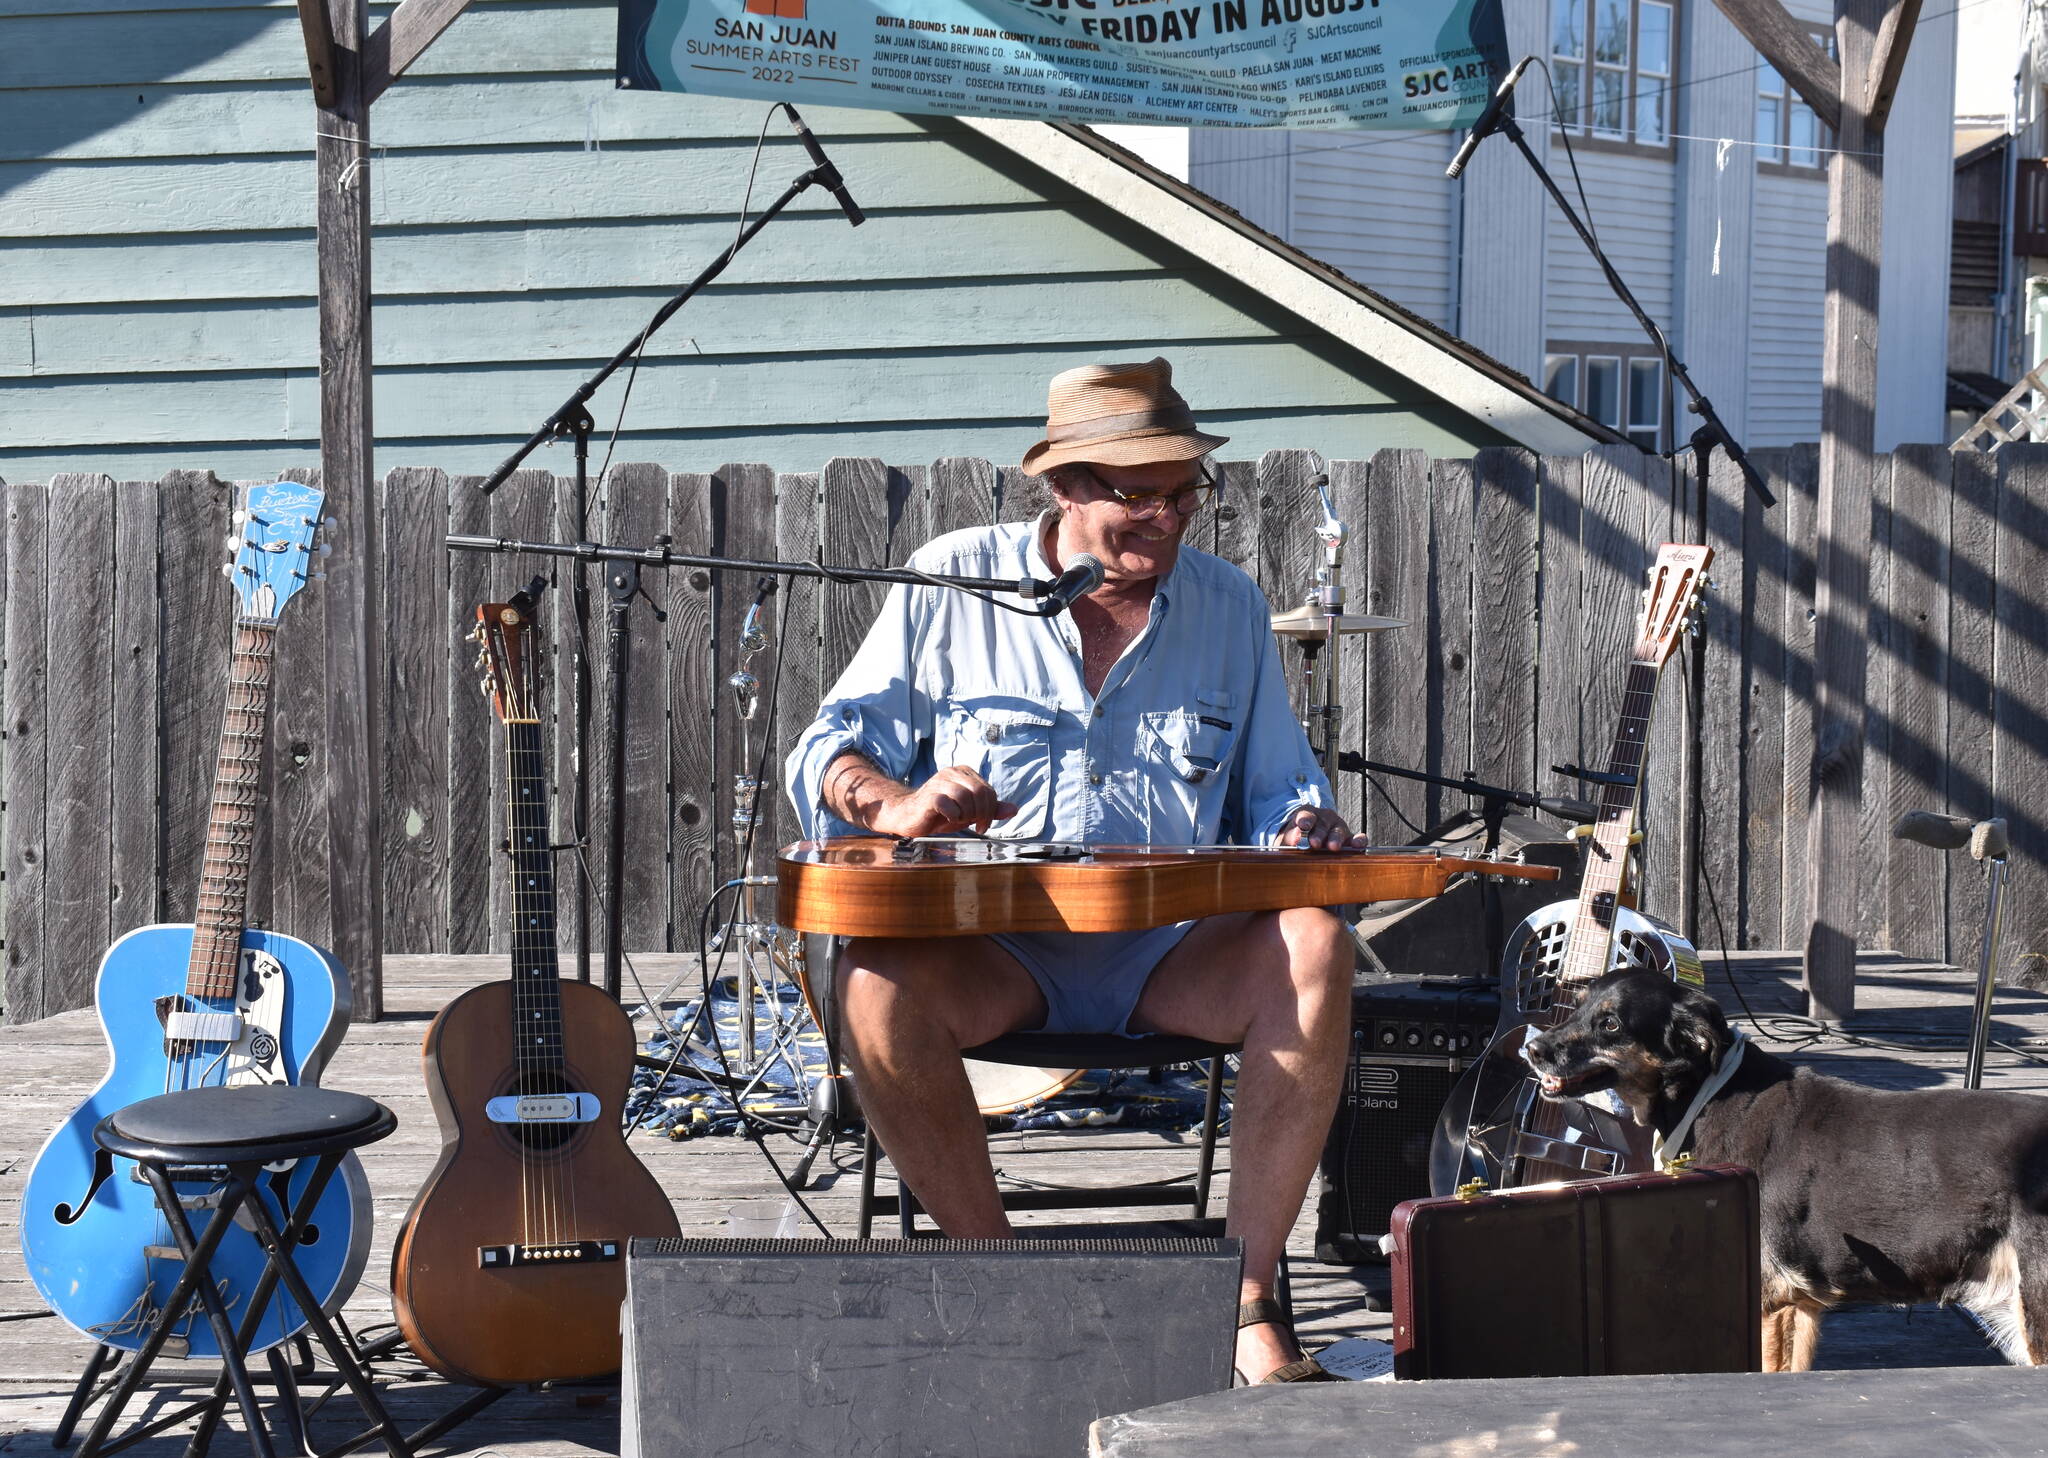 Local musician James Taylor performs at the San Juan Summer Arts Festival.